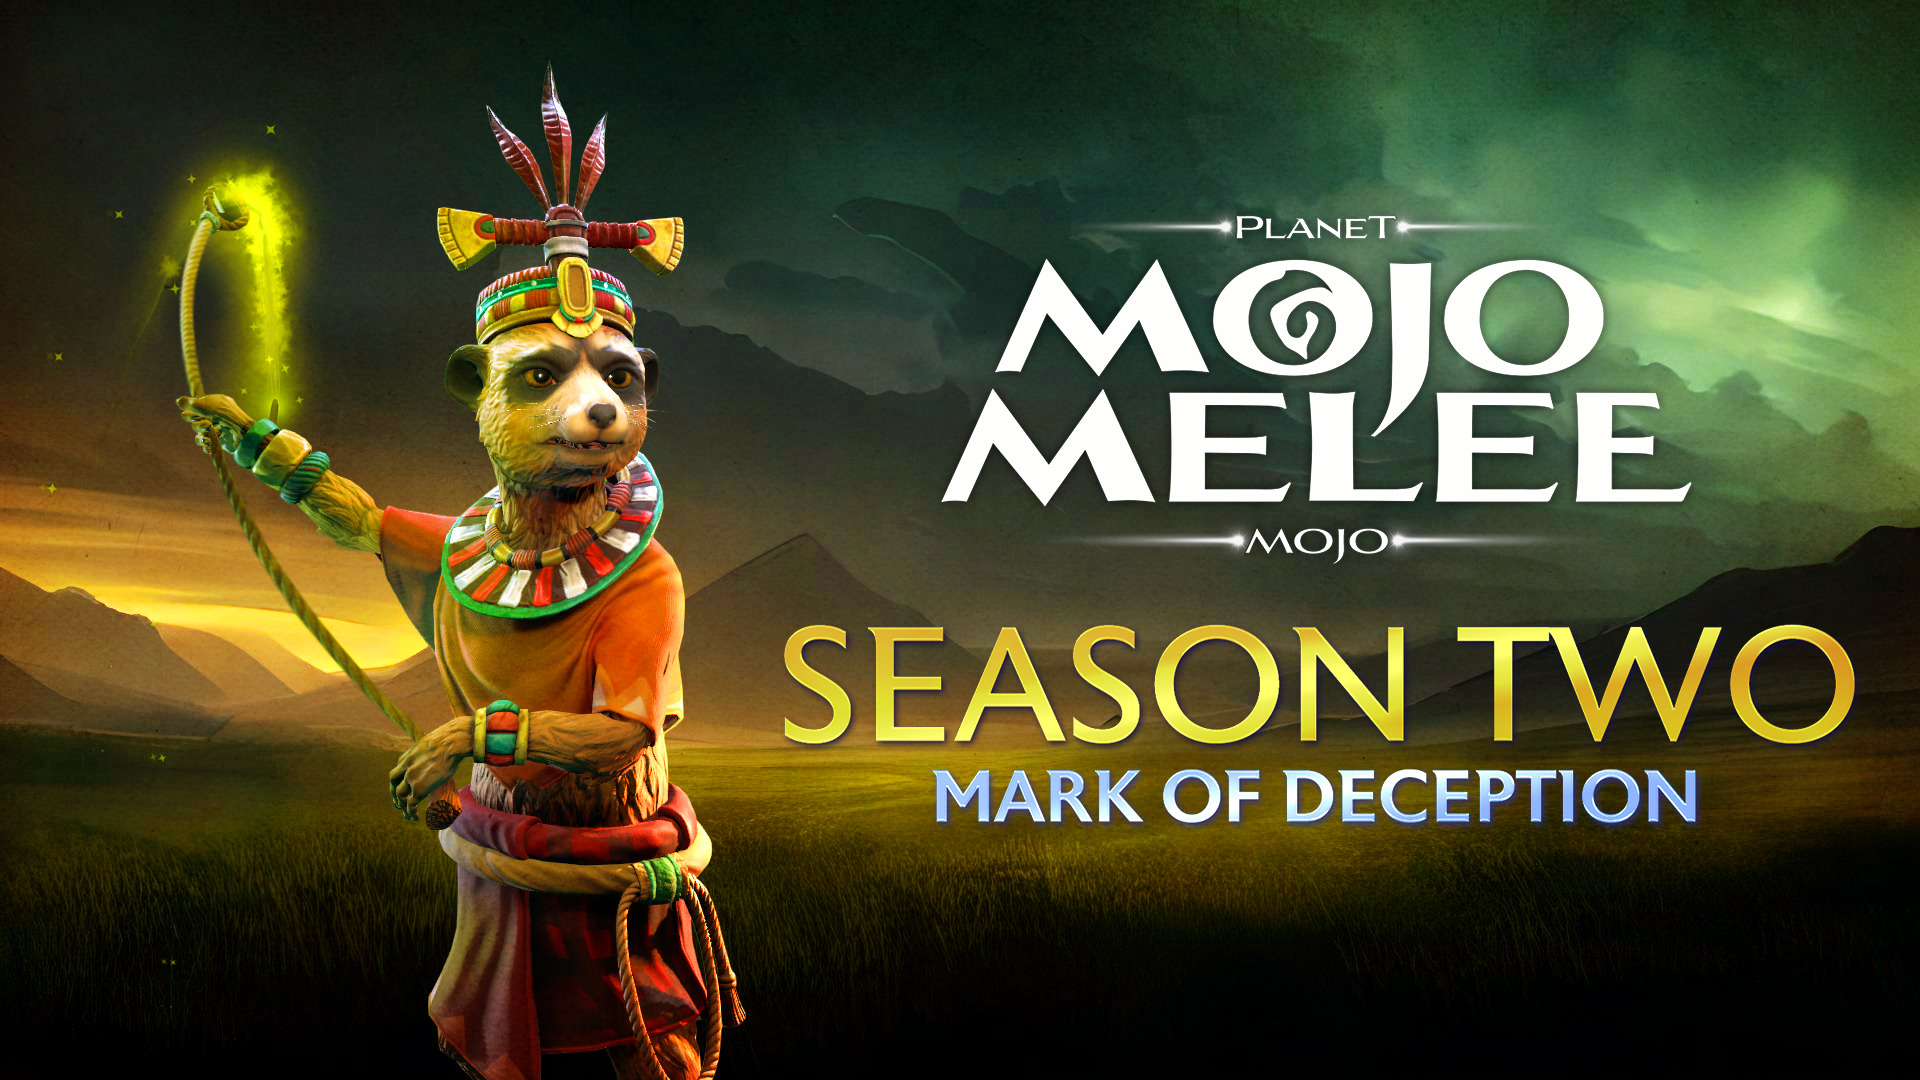 Mojo Melee Season Two and Amazon Partnership